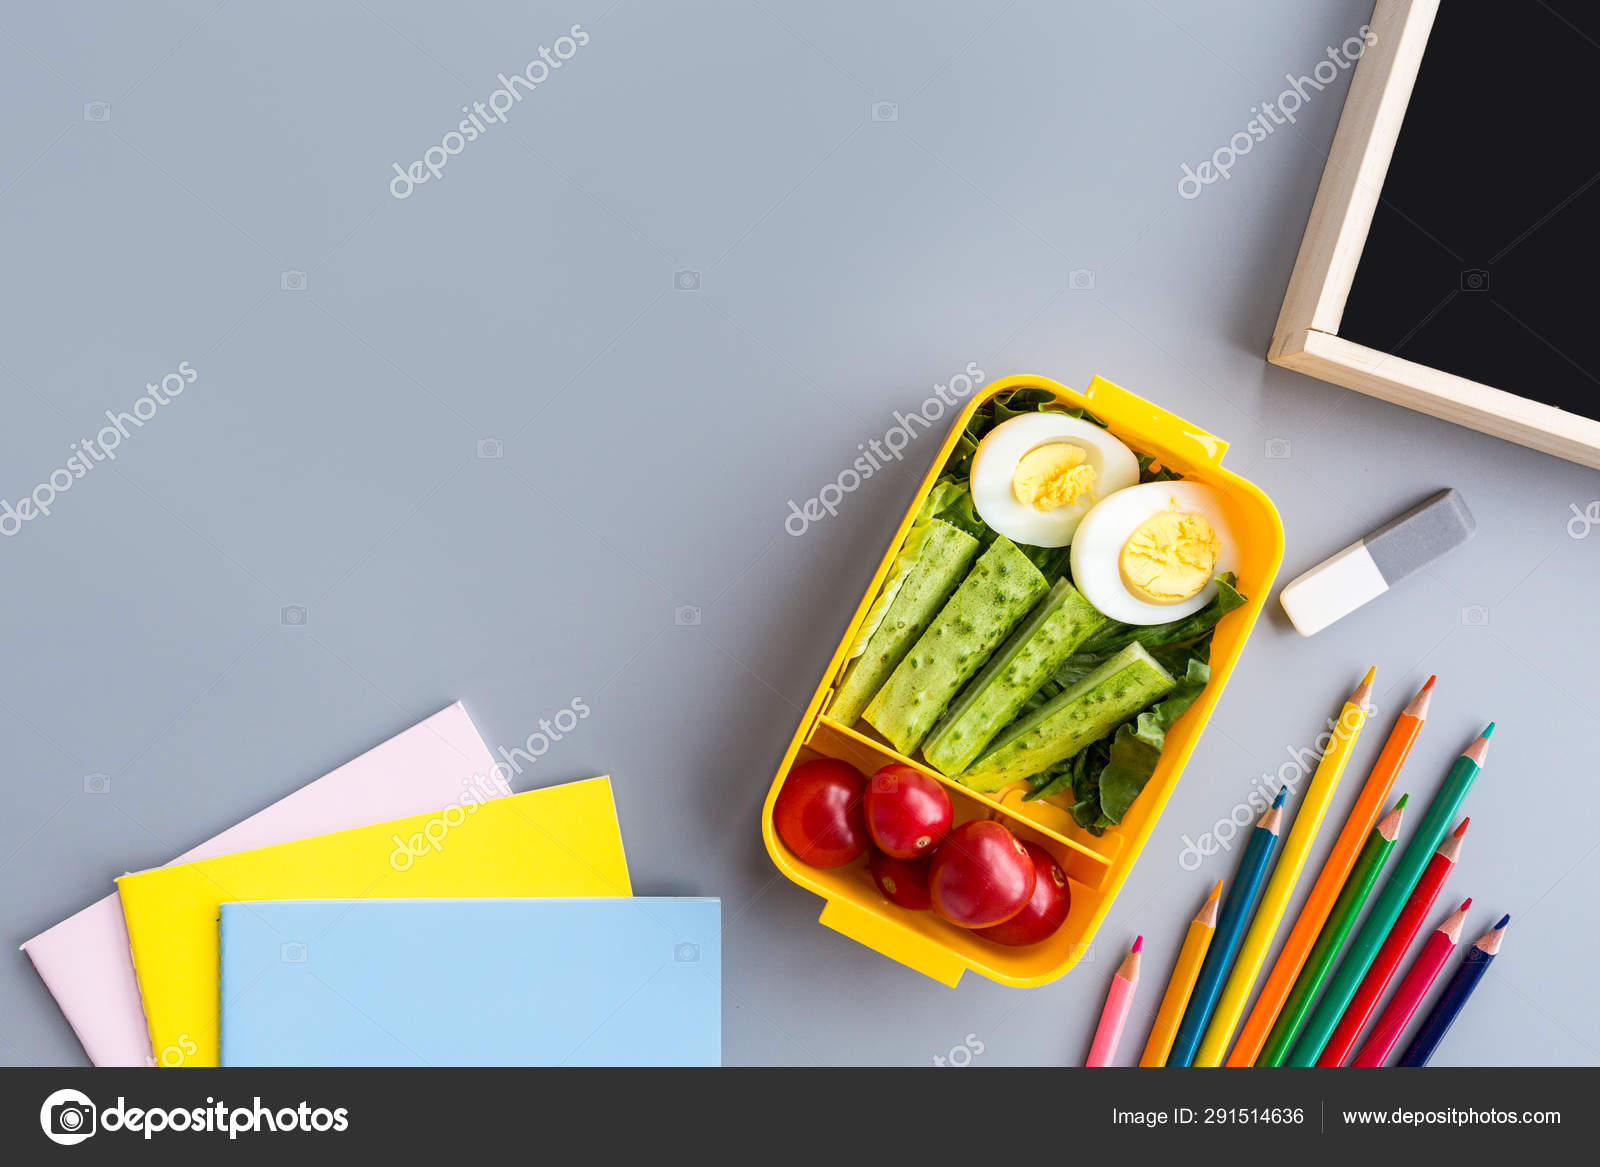 https://st4.depositphotos.com/24303524/29151/i/1600/depositphotos_291514636-stock-photo-school-supplies-and-lunch-box.jpg